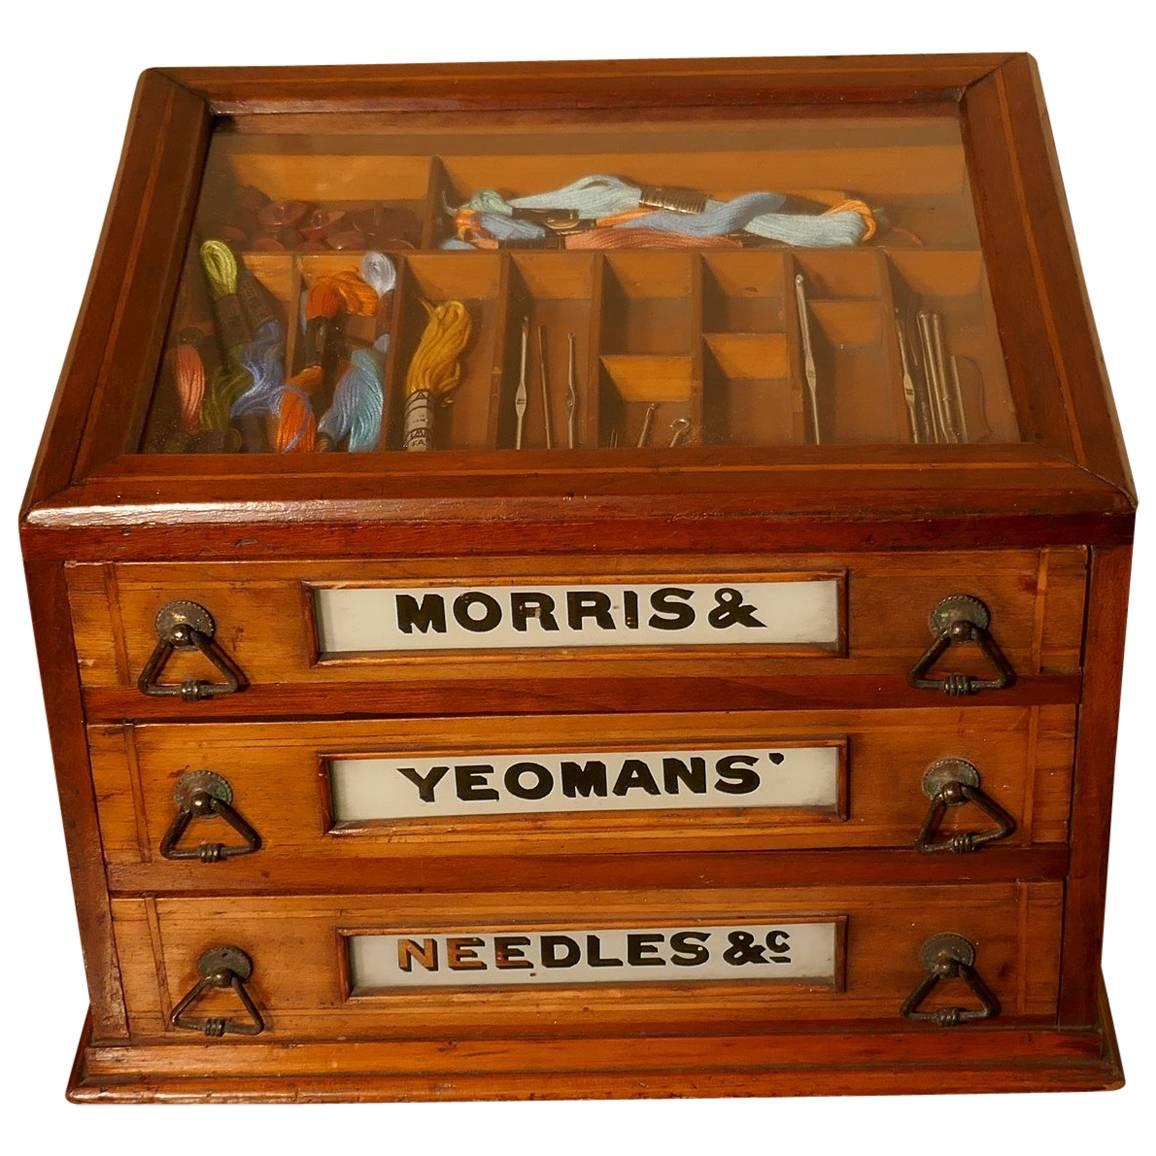 Morris and Yeoman’s Needles & Co. Haberdashery Advertising Three-Drawer Cabinet